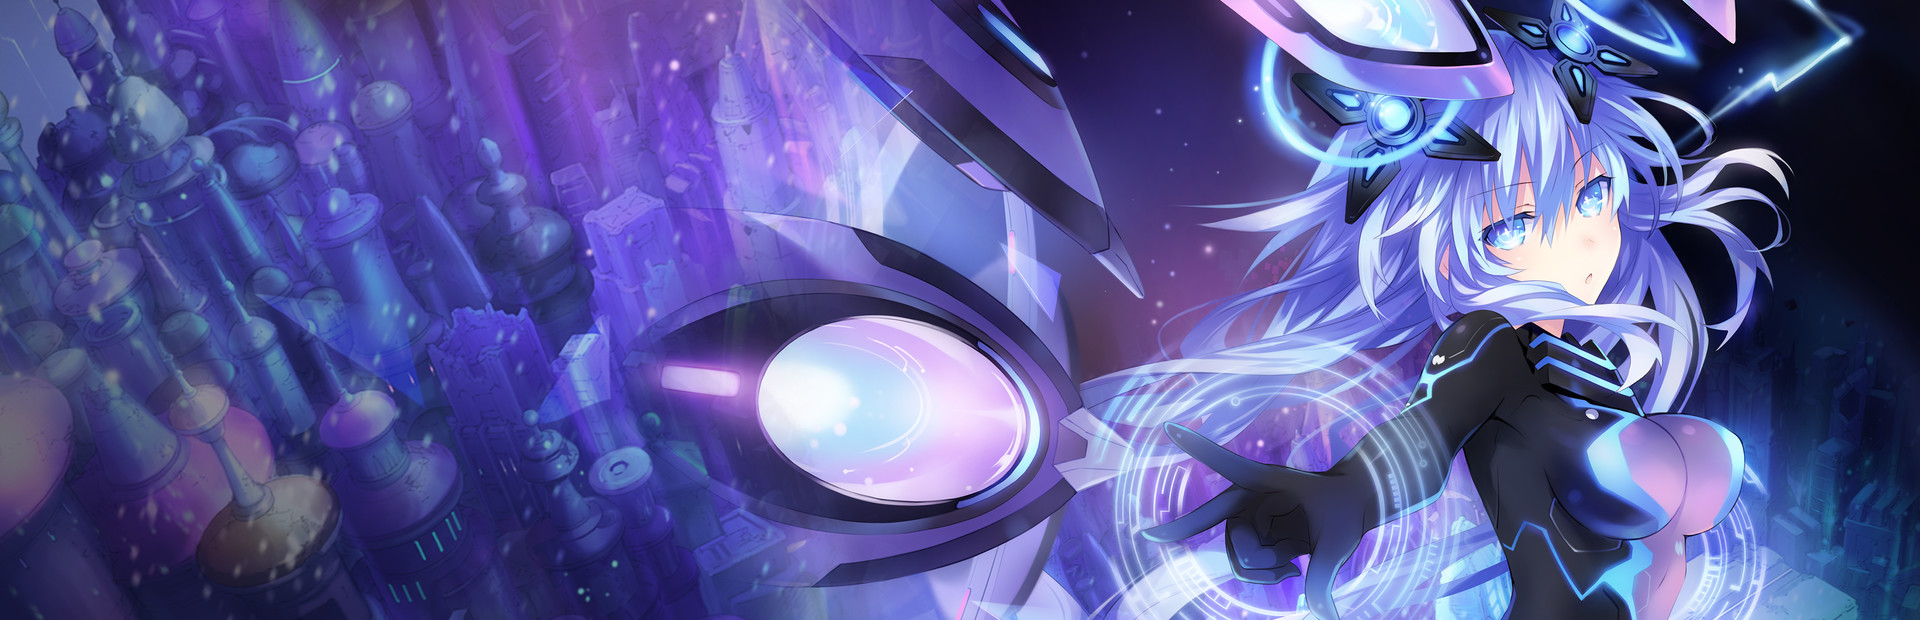 Megadimension Neptunia VII cover image